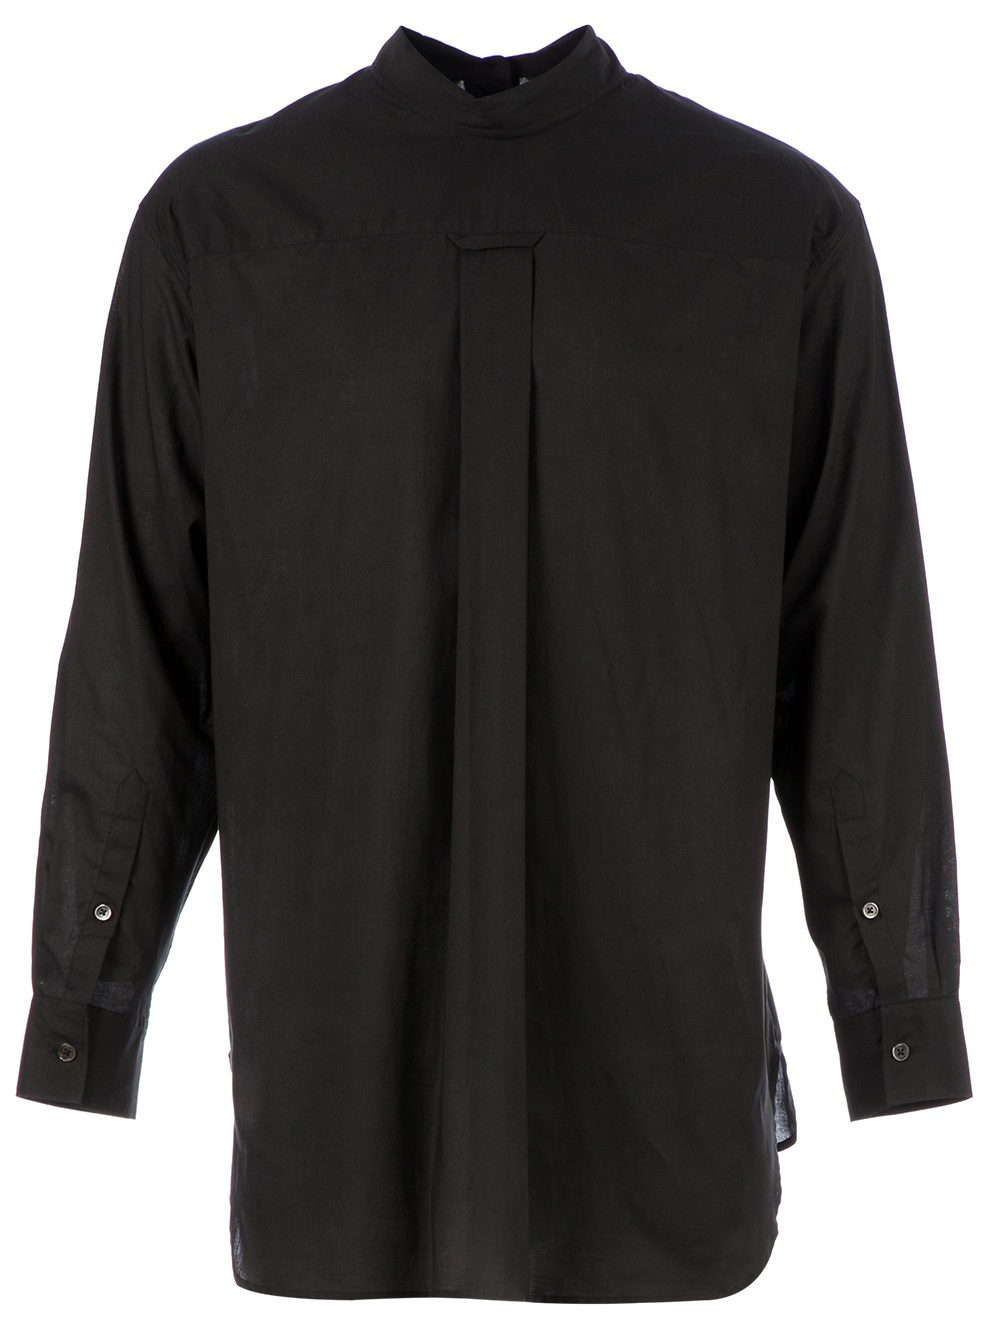 Lyst - Ann demeulemeester Rear Button Fastening Shirt in Black for Men